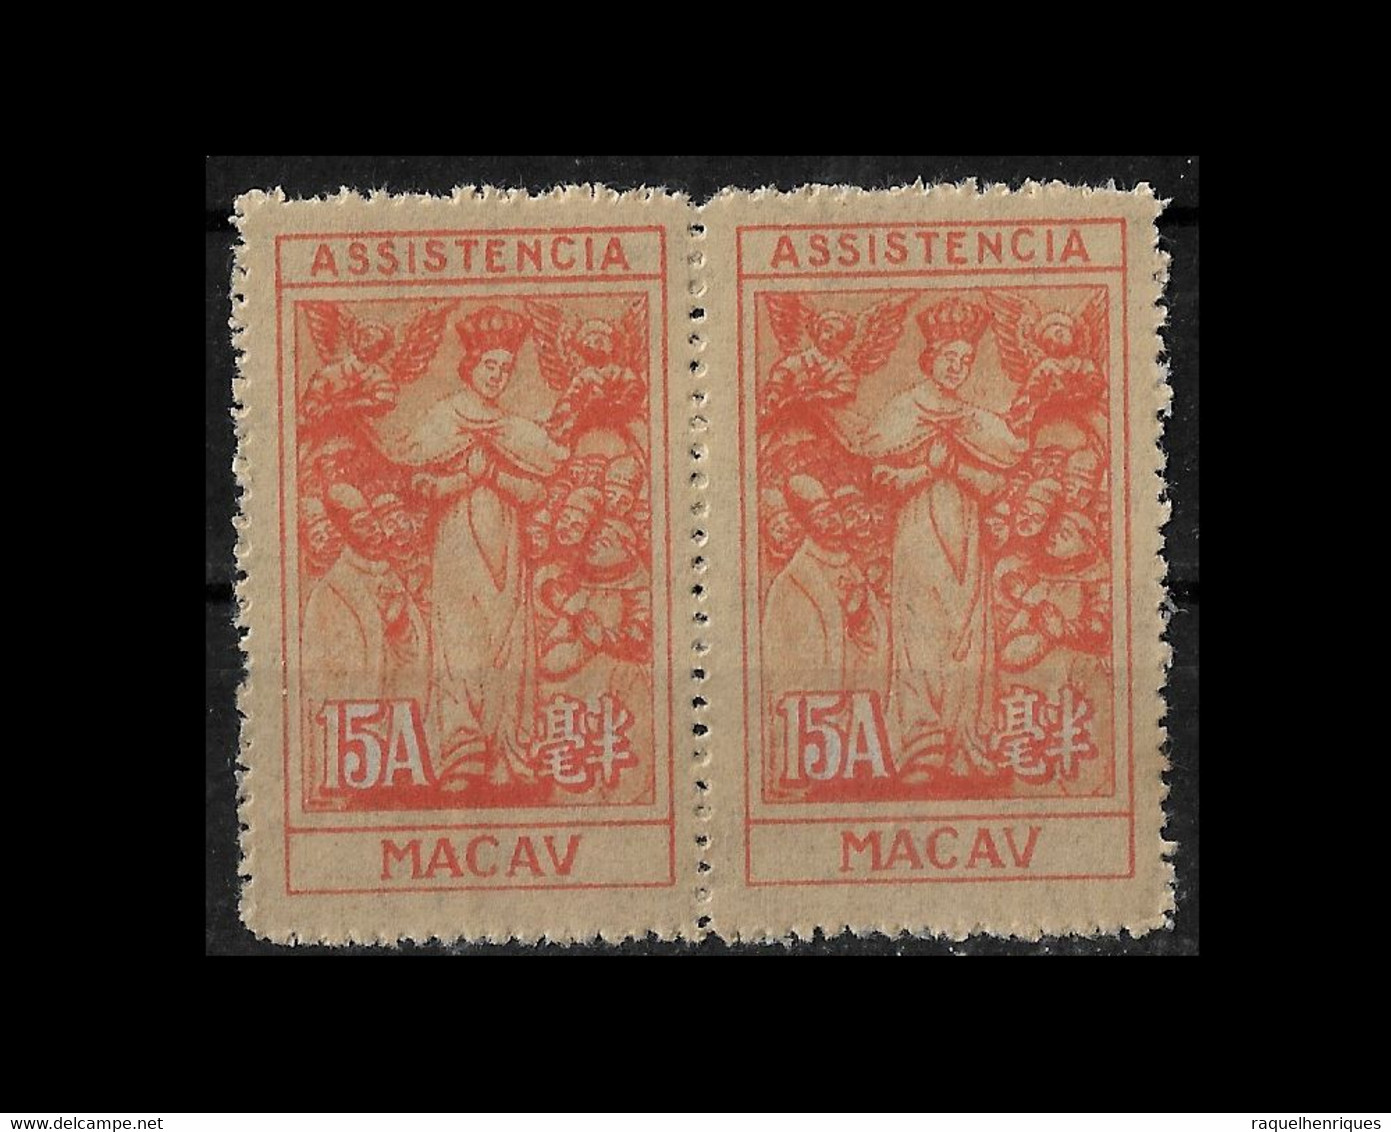 MACAU STAMP - 1945-47 Symbol Of Charity - Inscription "ASSISTENCIA" Perf:11 PAIR MNH (BA5#319) - Impuestos